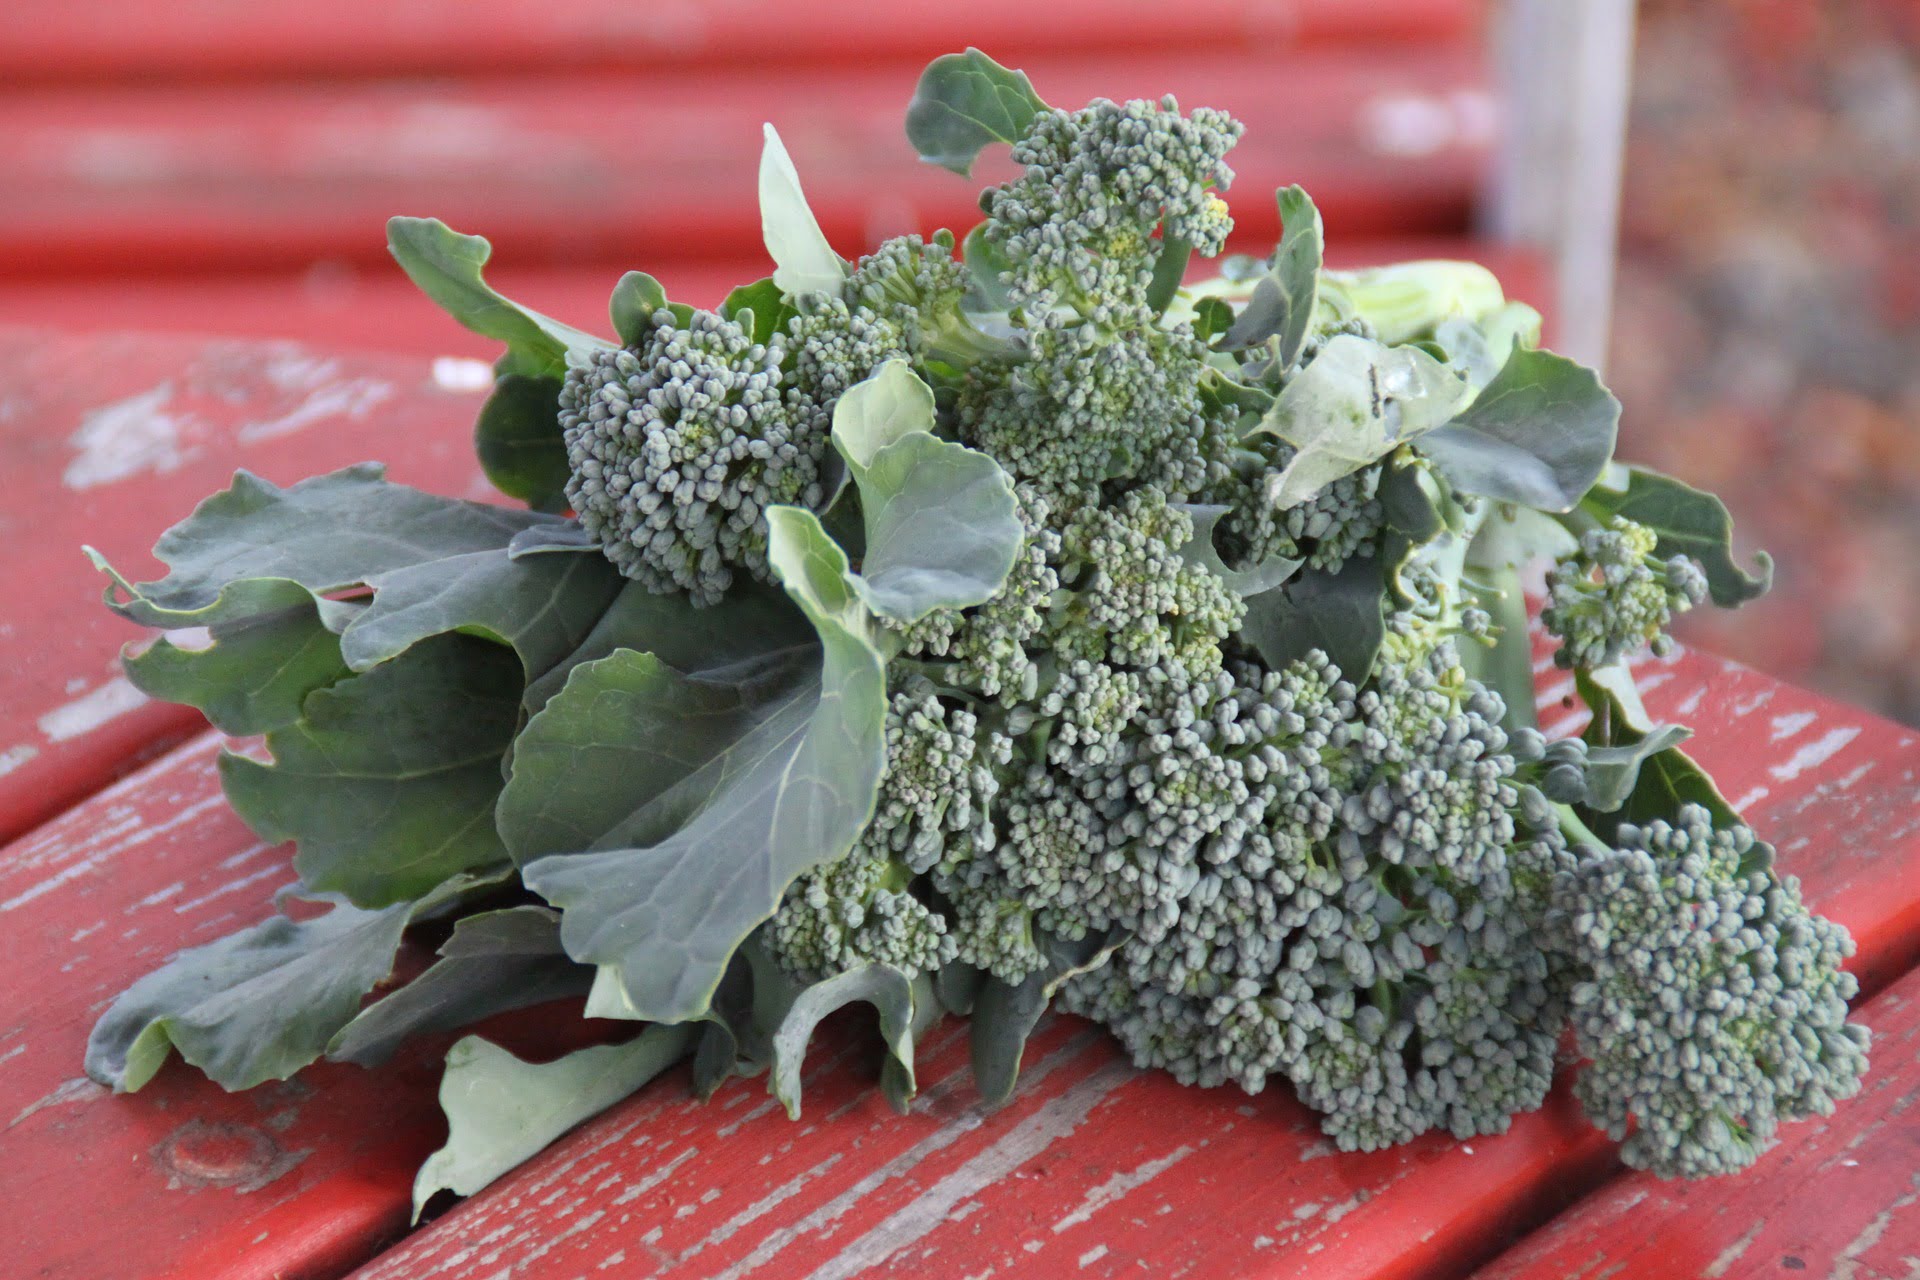 How Many Broccoli Heads Grow On One Plant?